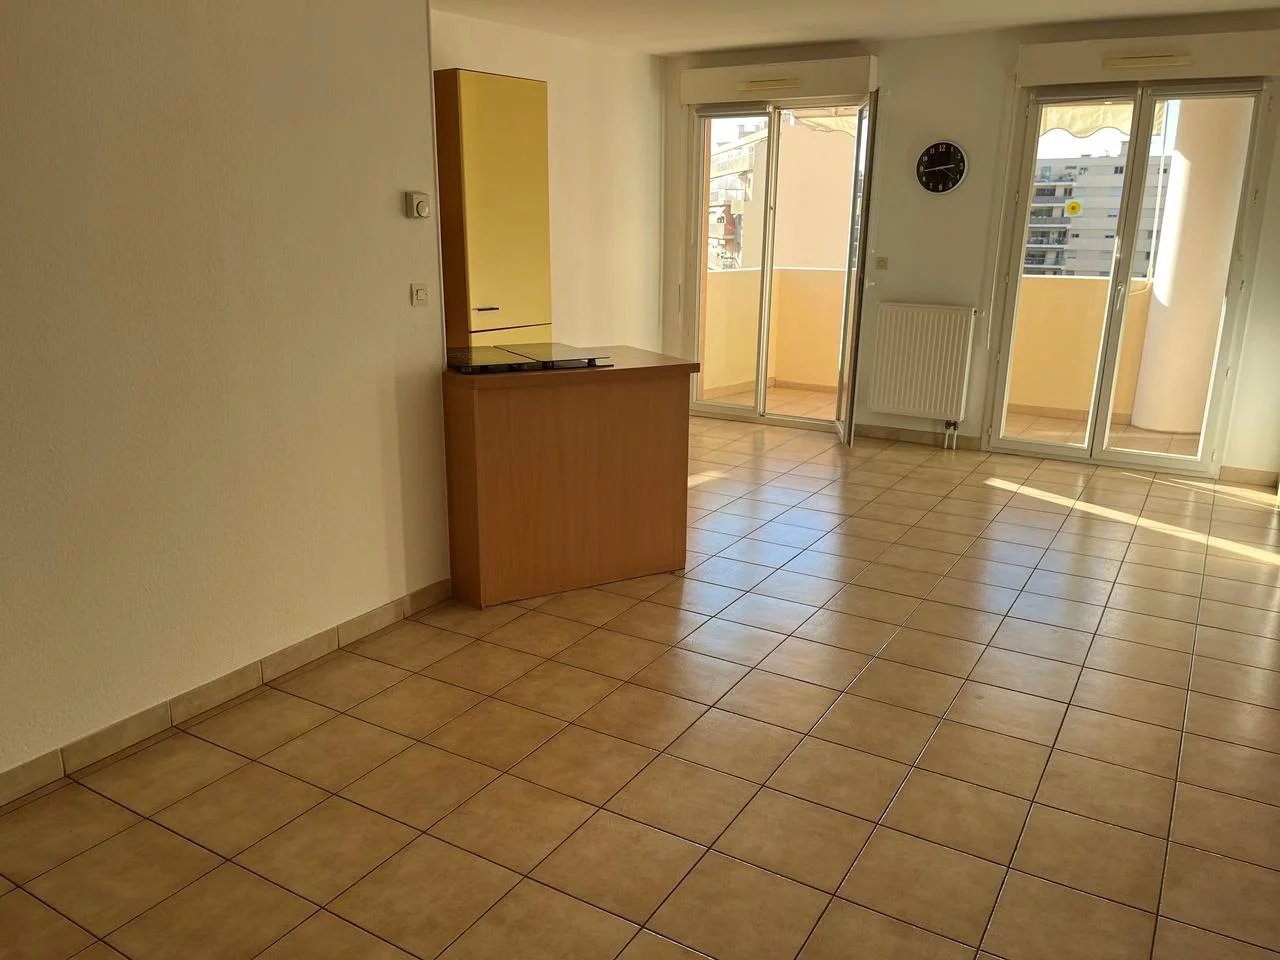 Appartement  3 Locali 62m2  In vendita   250 000 €